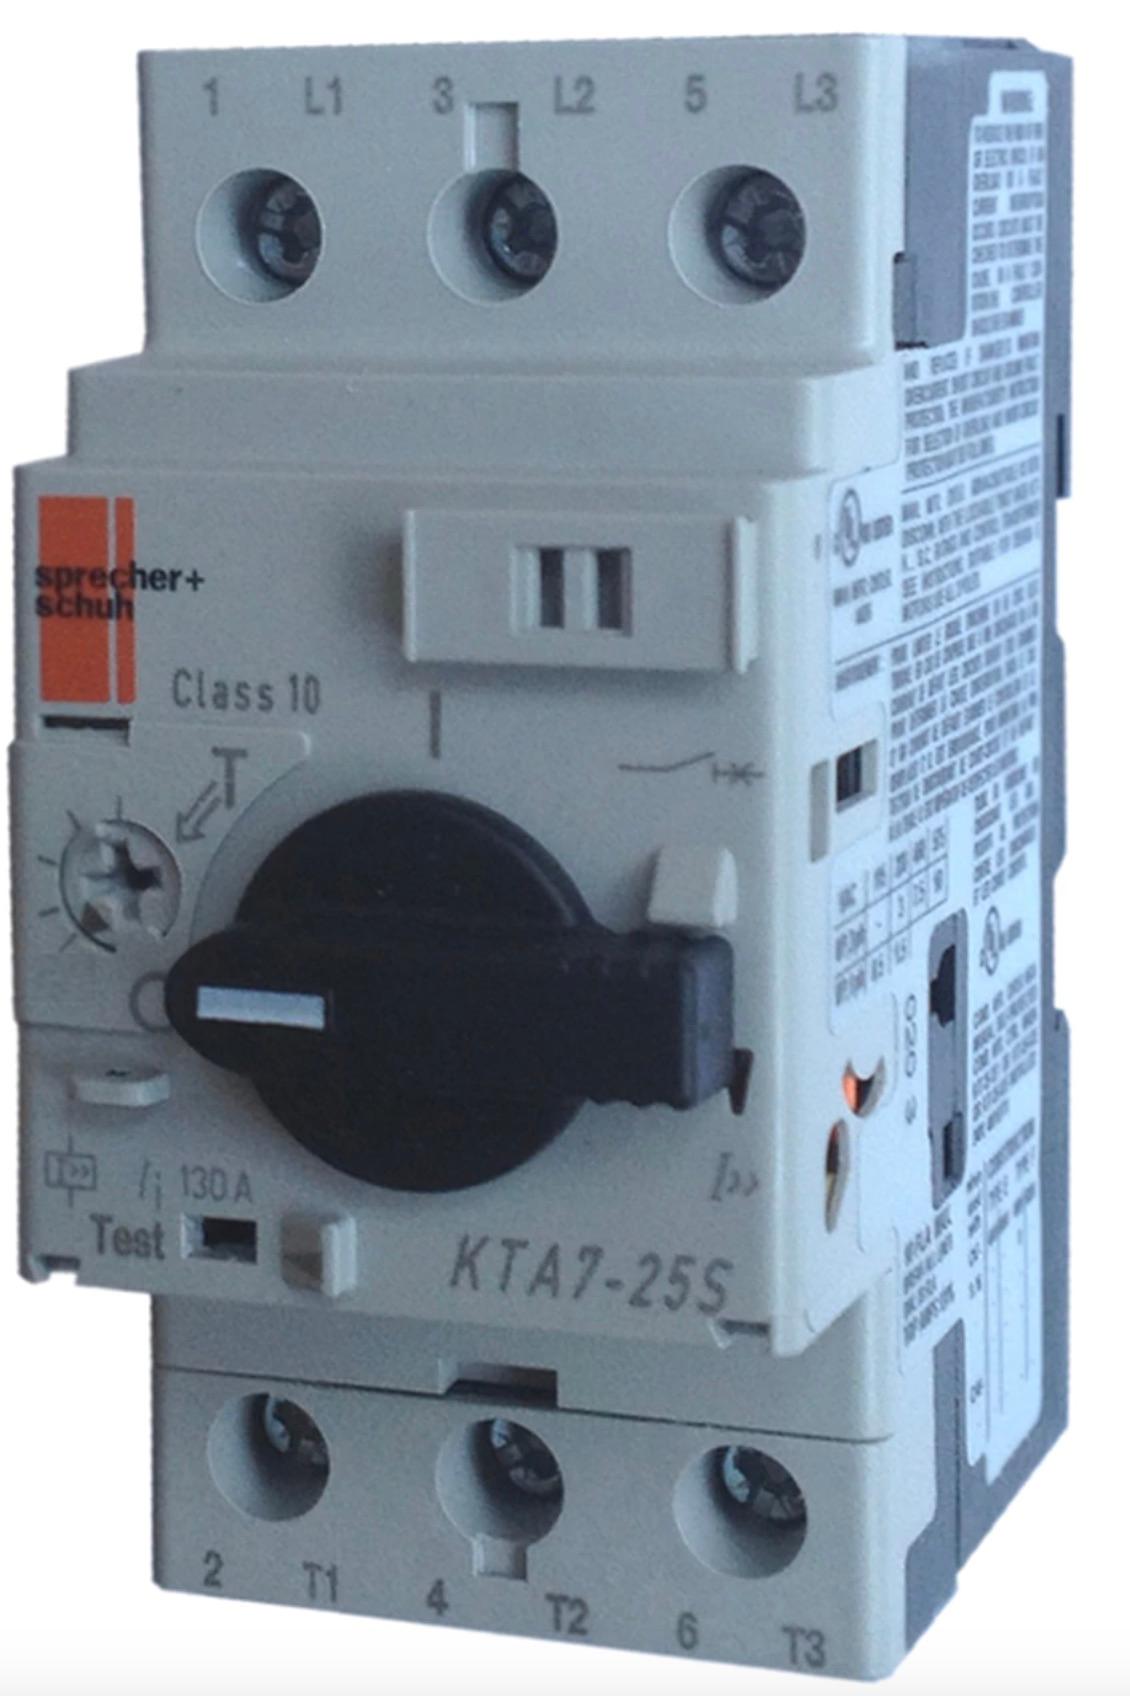 Sprecher + Schuh KTA7-25S-16A Manual motor controller, 208 Amps, 10...16 A Current Adjustment Range , Standard Interrupting Capacity